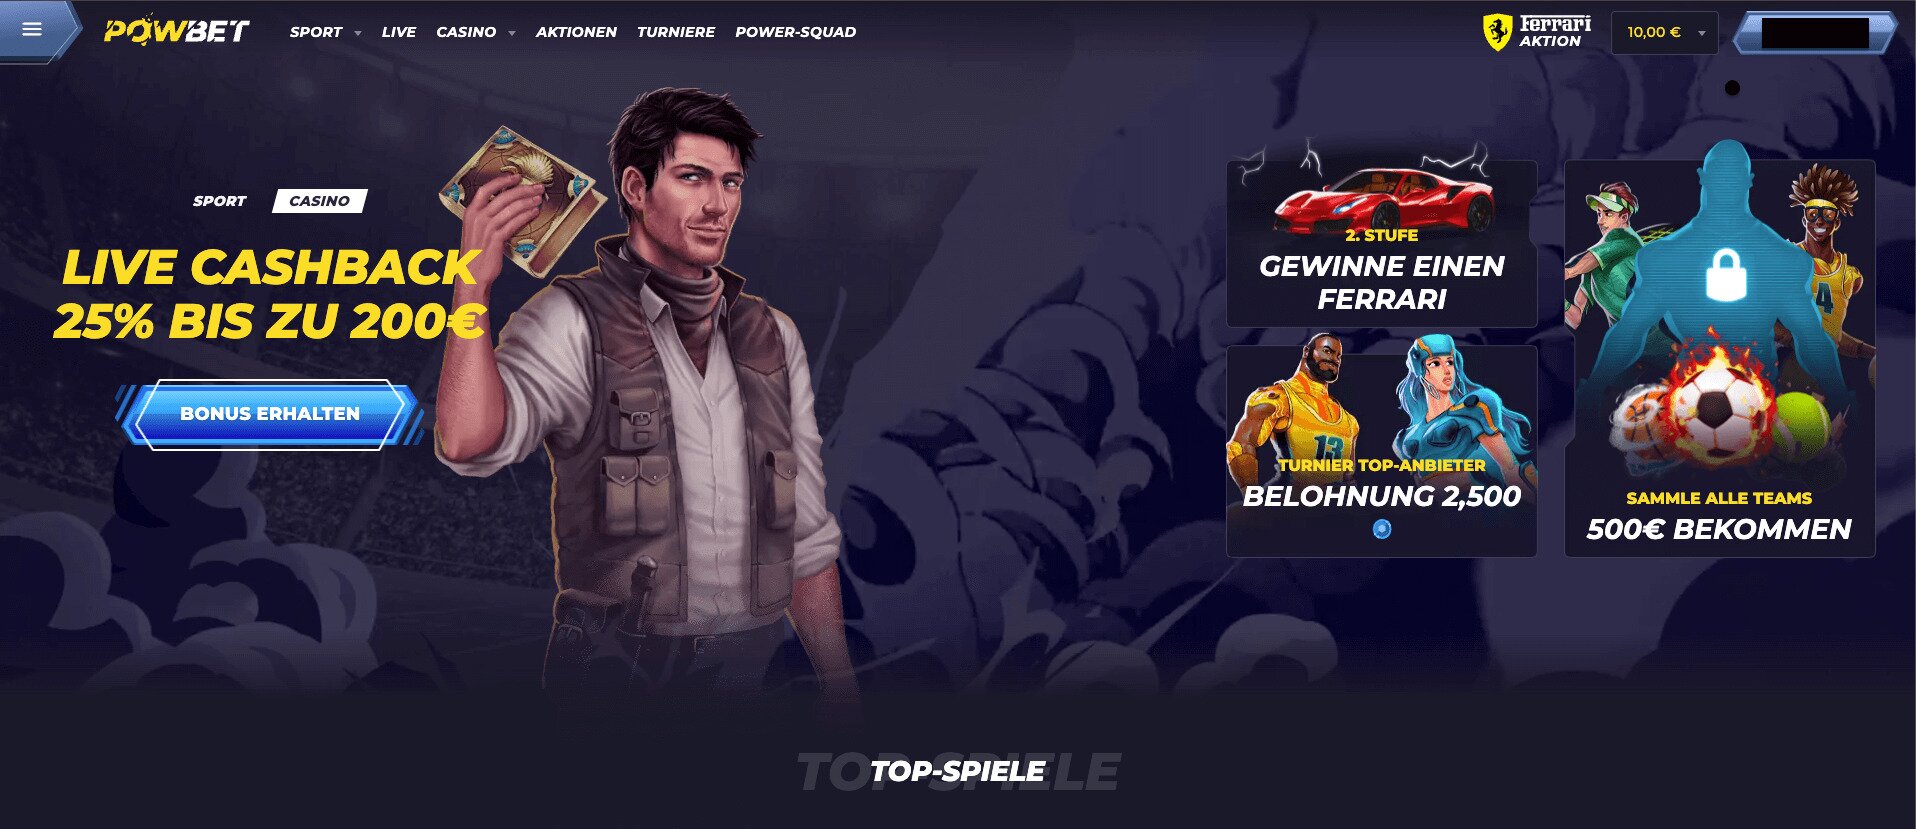 powbet casino homepage